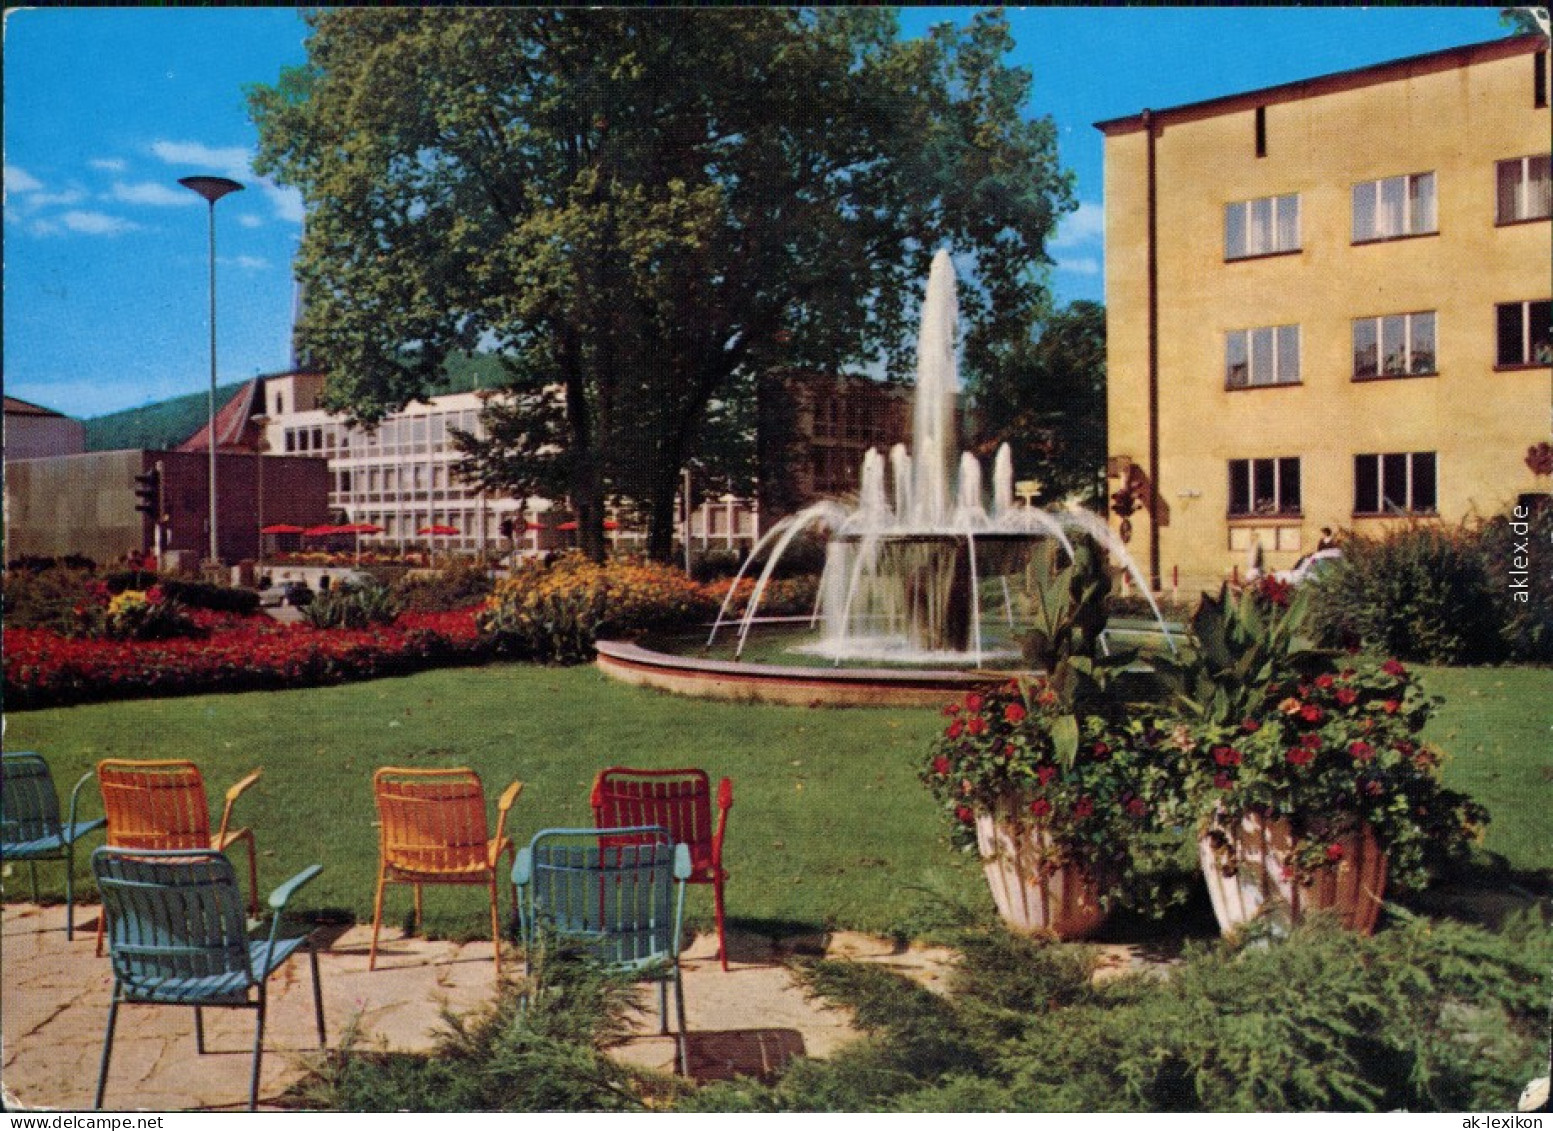 Ansichtskarte Bad Kissingen Marienplatz Mit Springbrunnen 1980 - Bad Kissingen